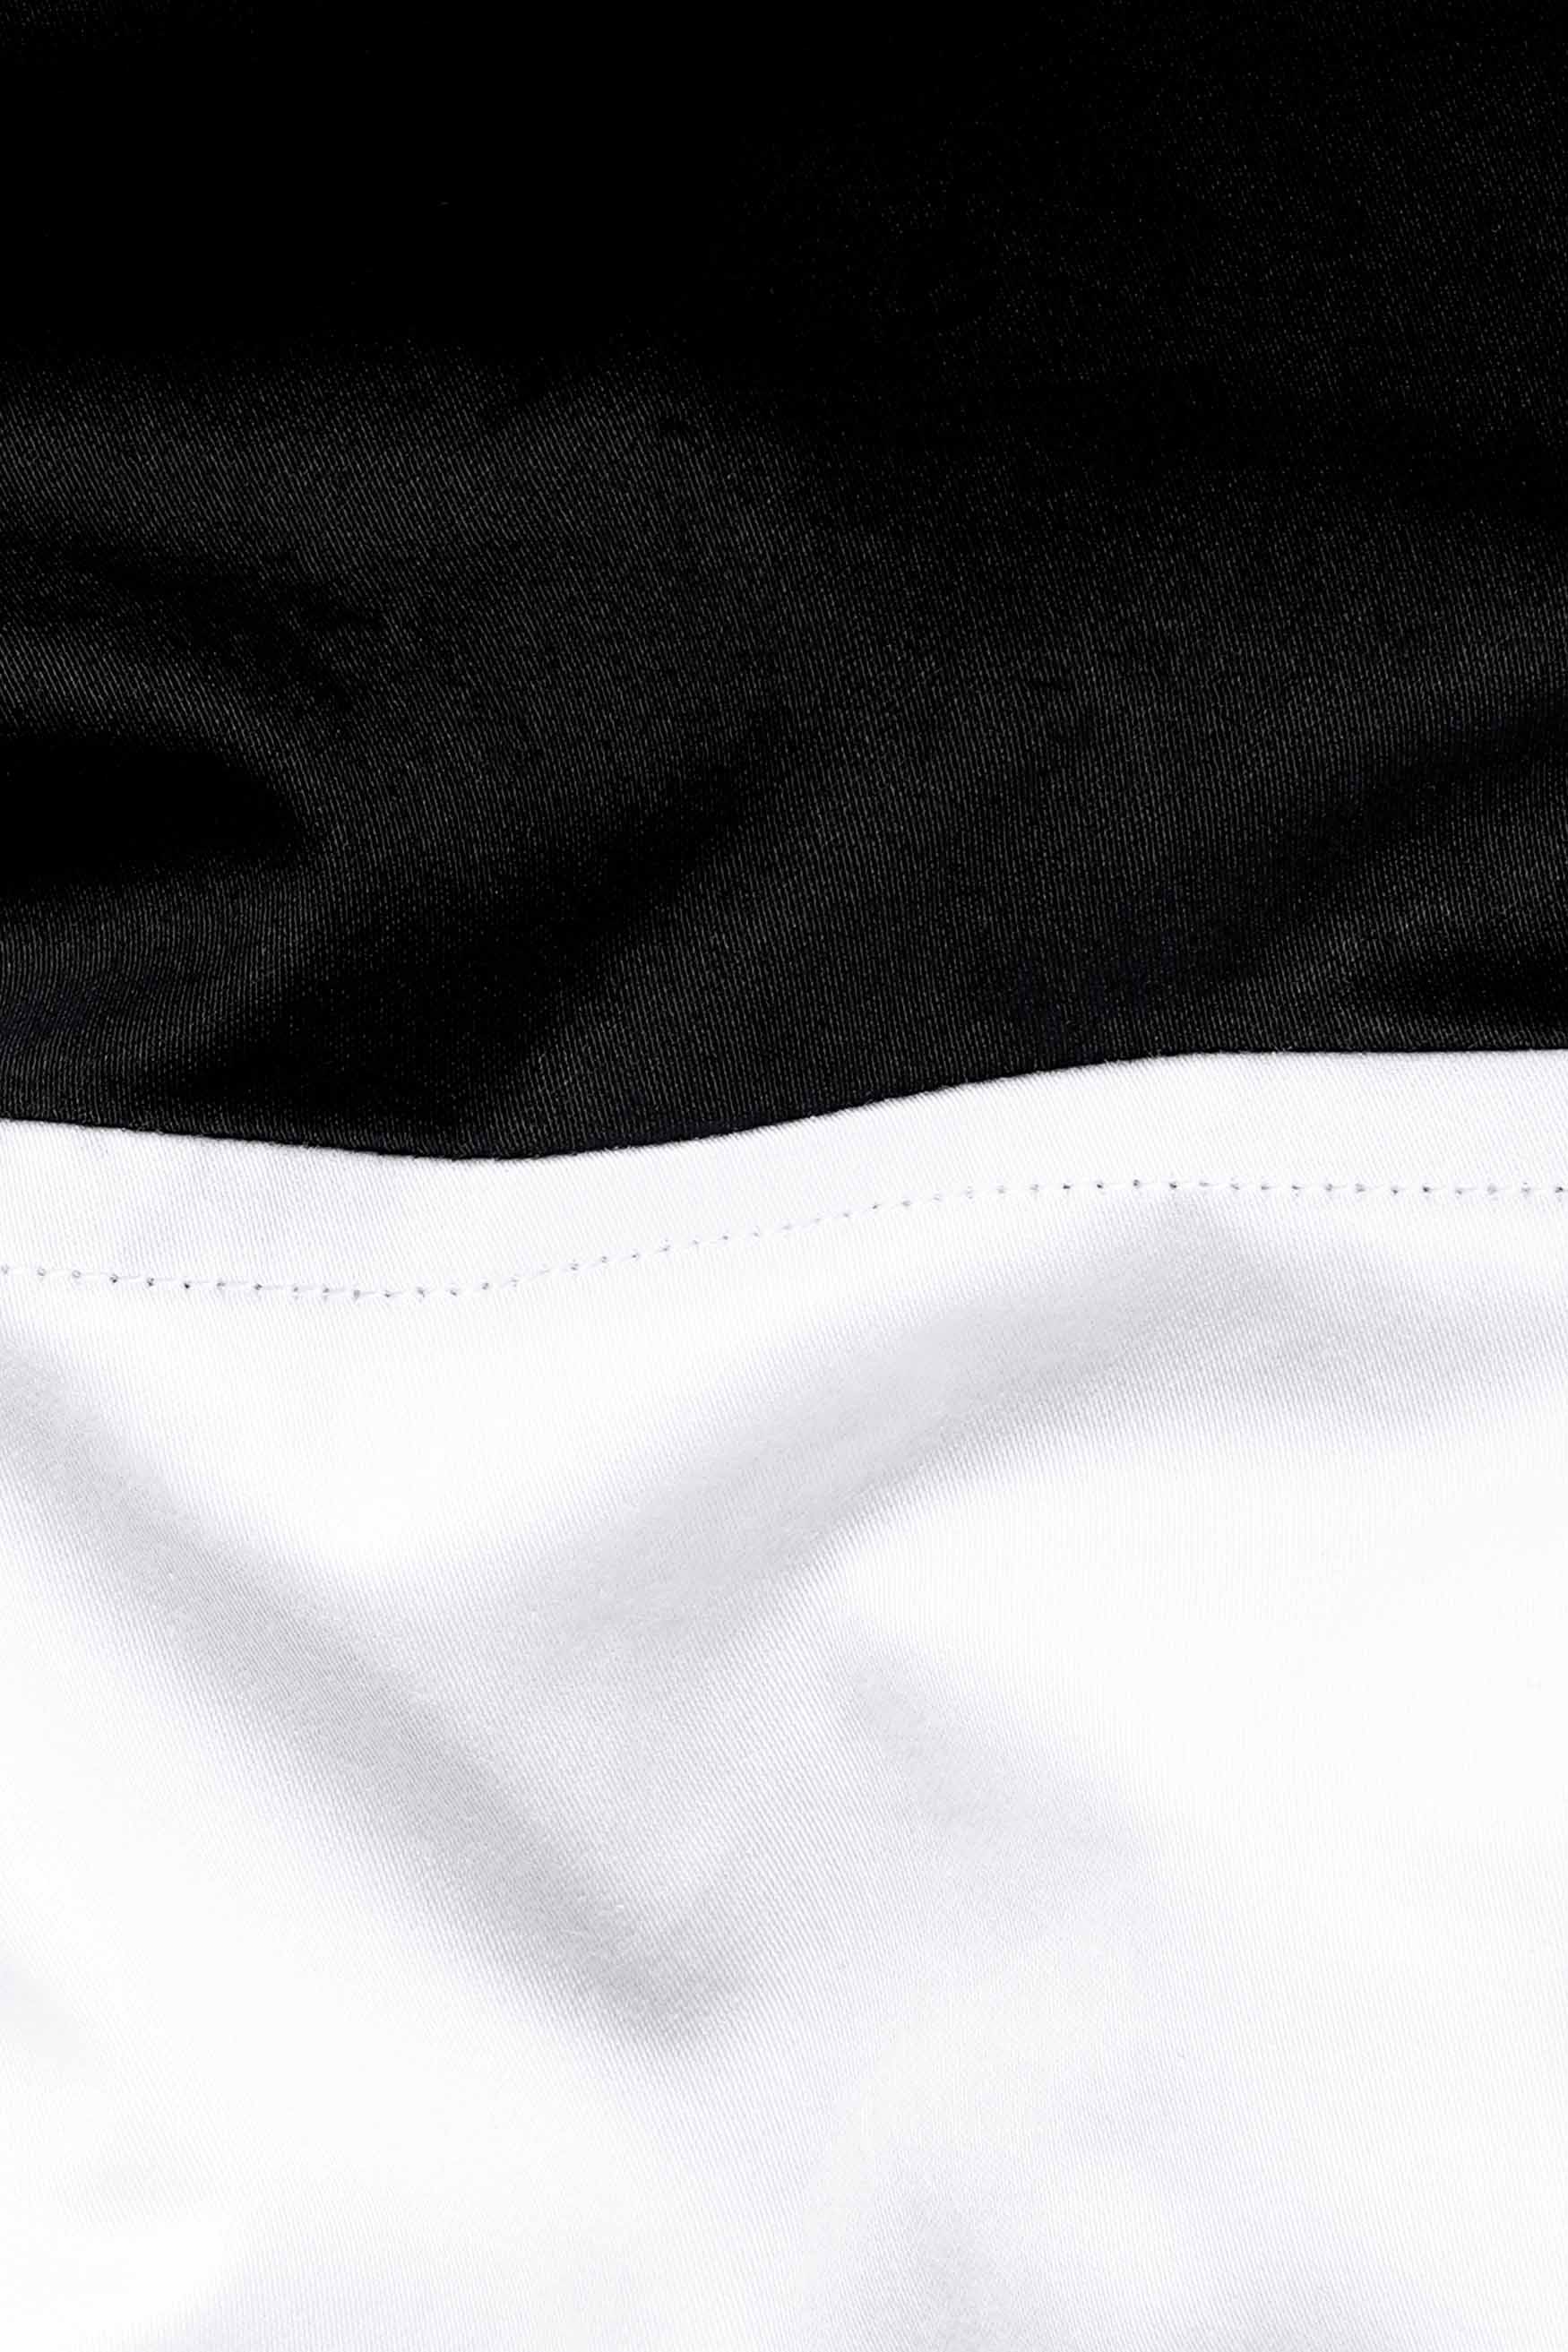 Jade Black Subtle Sheen and White Super Soft Premium Cotton Designer Shirt